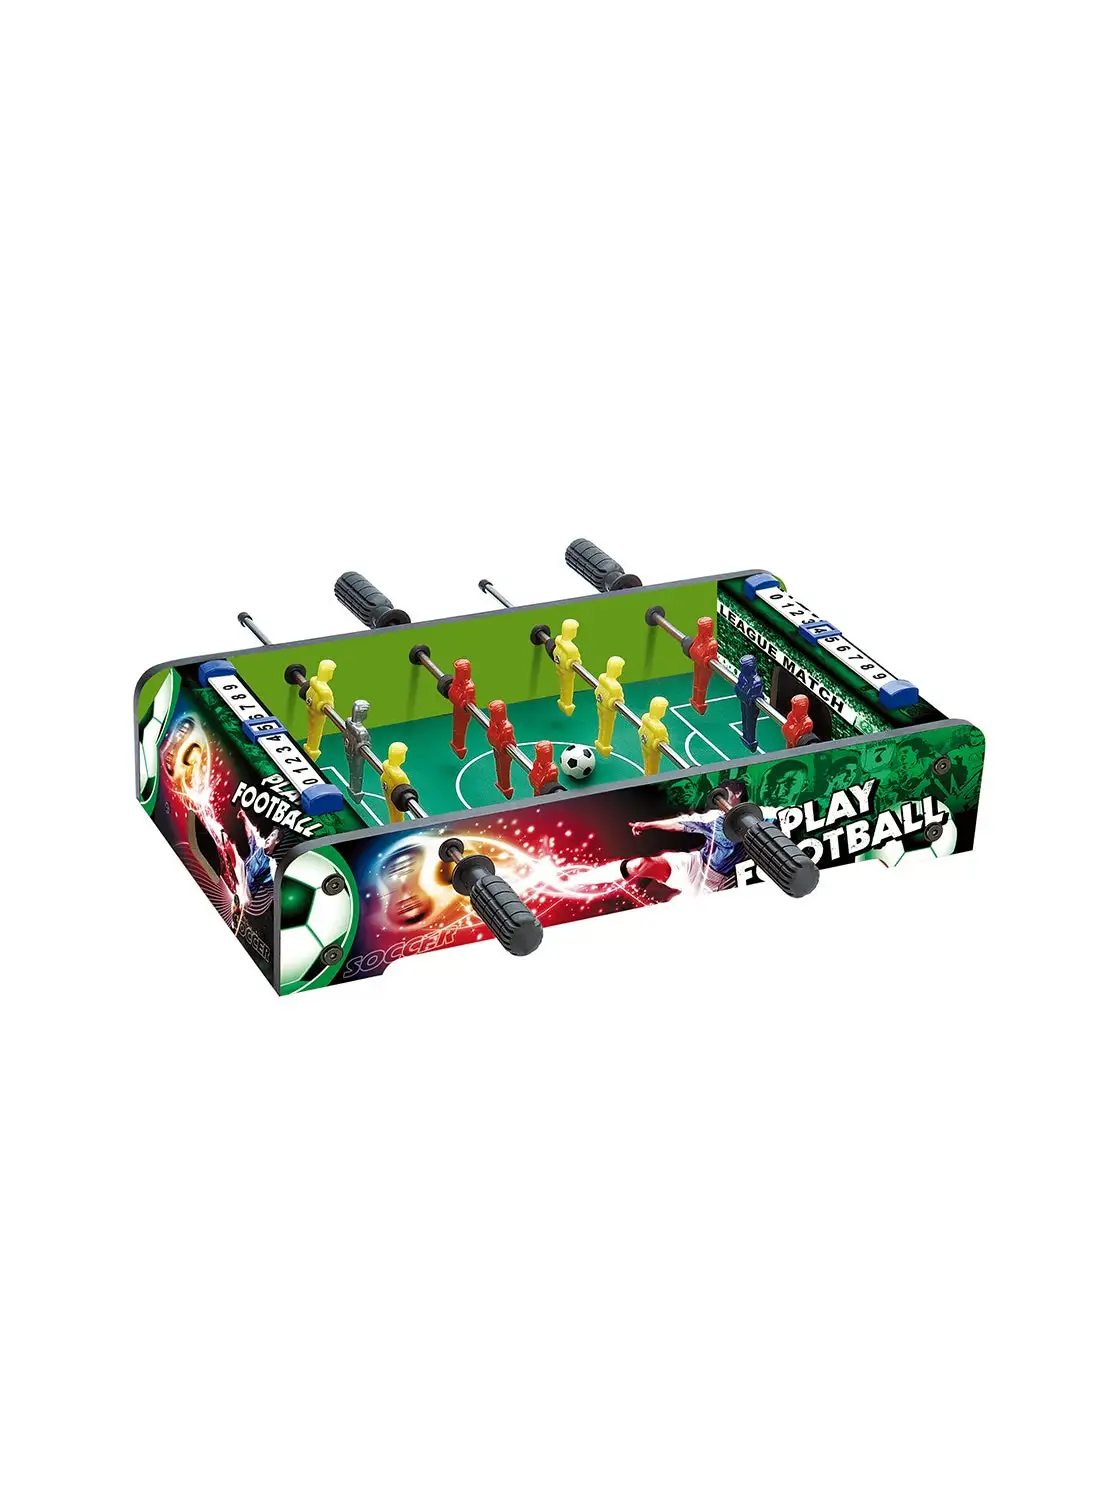 XIANGJUN Indoor Hand Soccer Table Mini Game Set 46X25X20cm